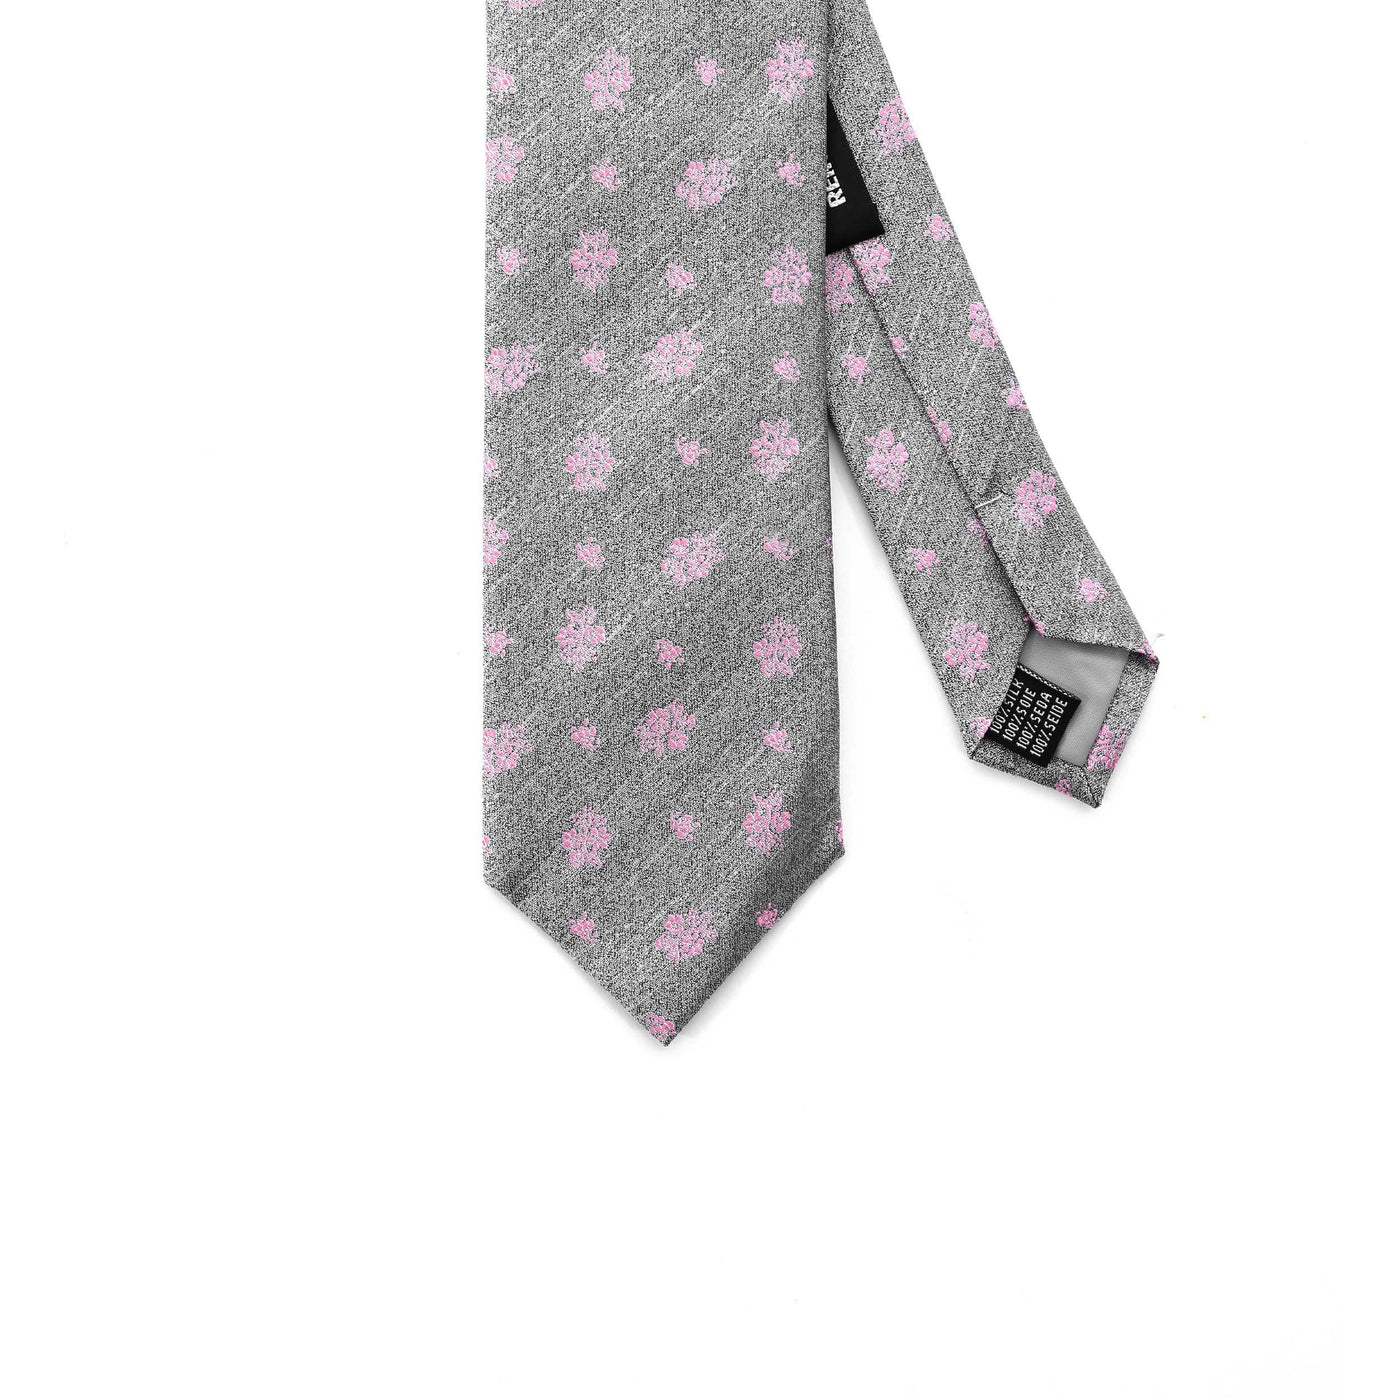 Remus Uomo Floral Print Tie & Hank Set in Grey & Pink Tie